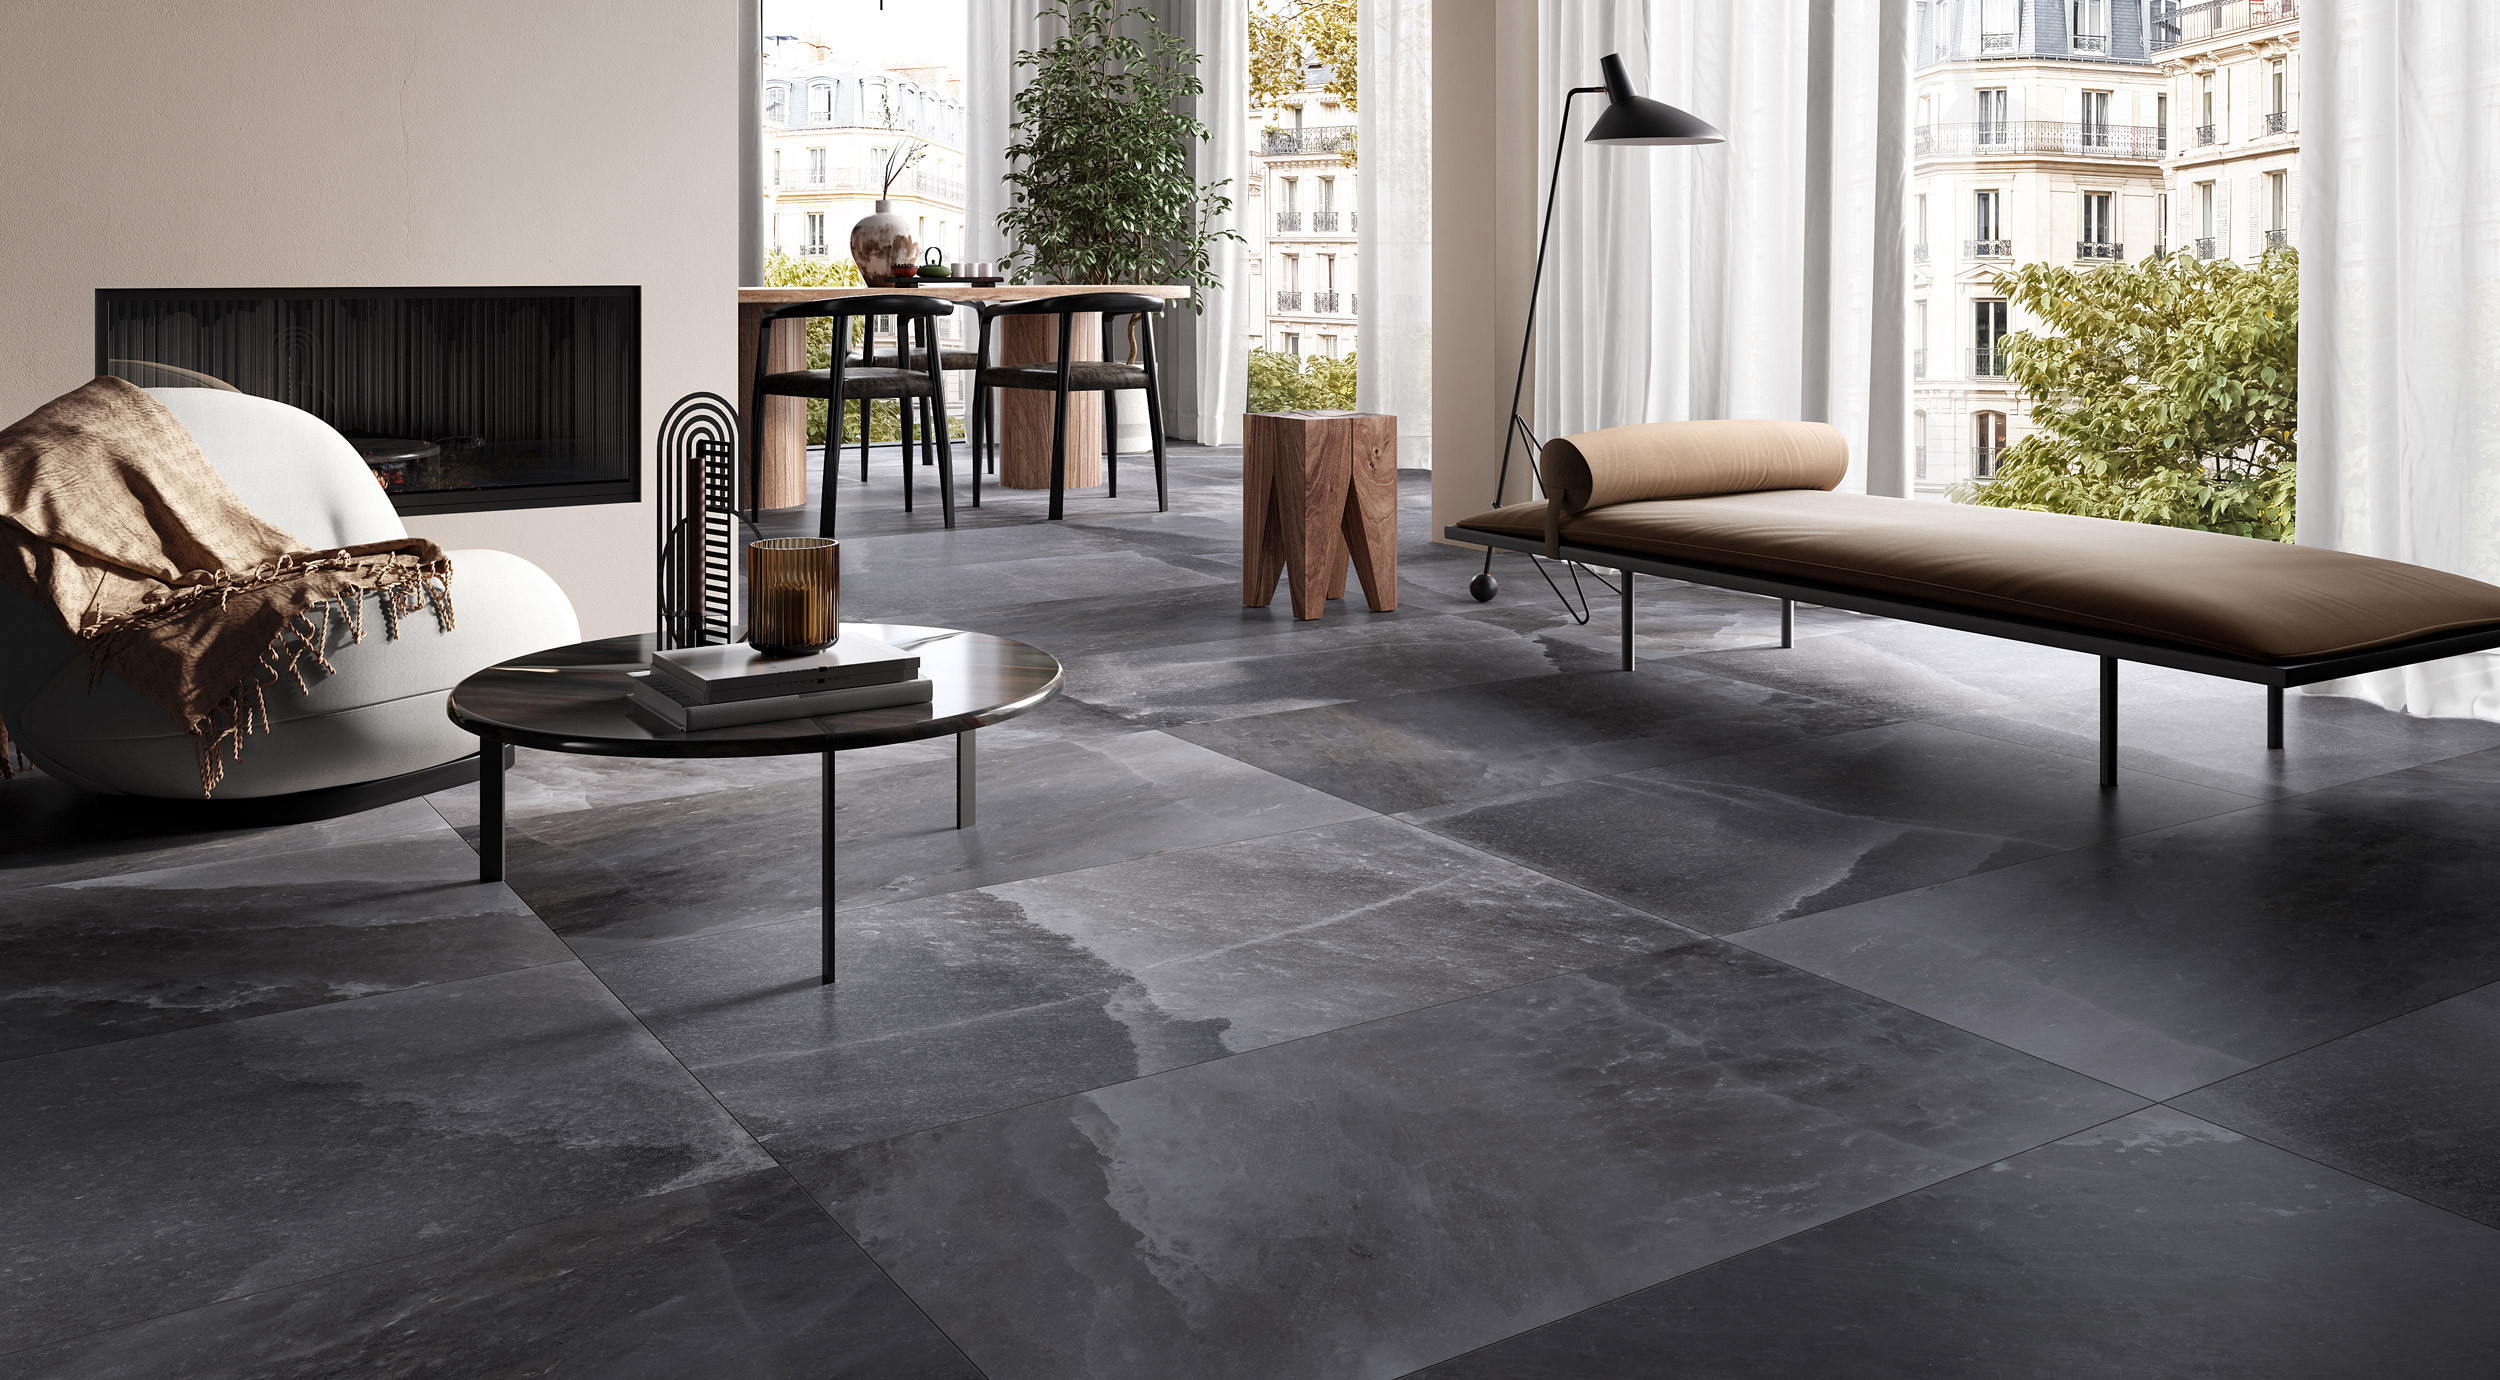 HIMALAYA granite effect porcelain tile floor by RONDINE color BLACK LAPPATO
